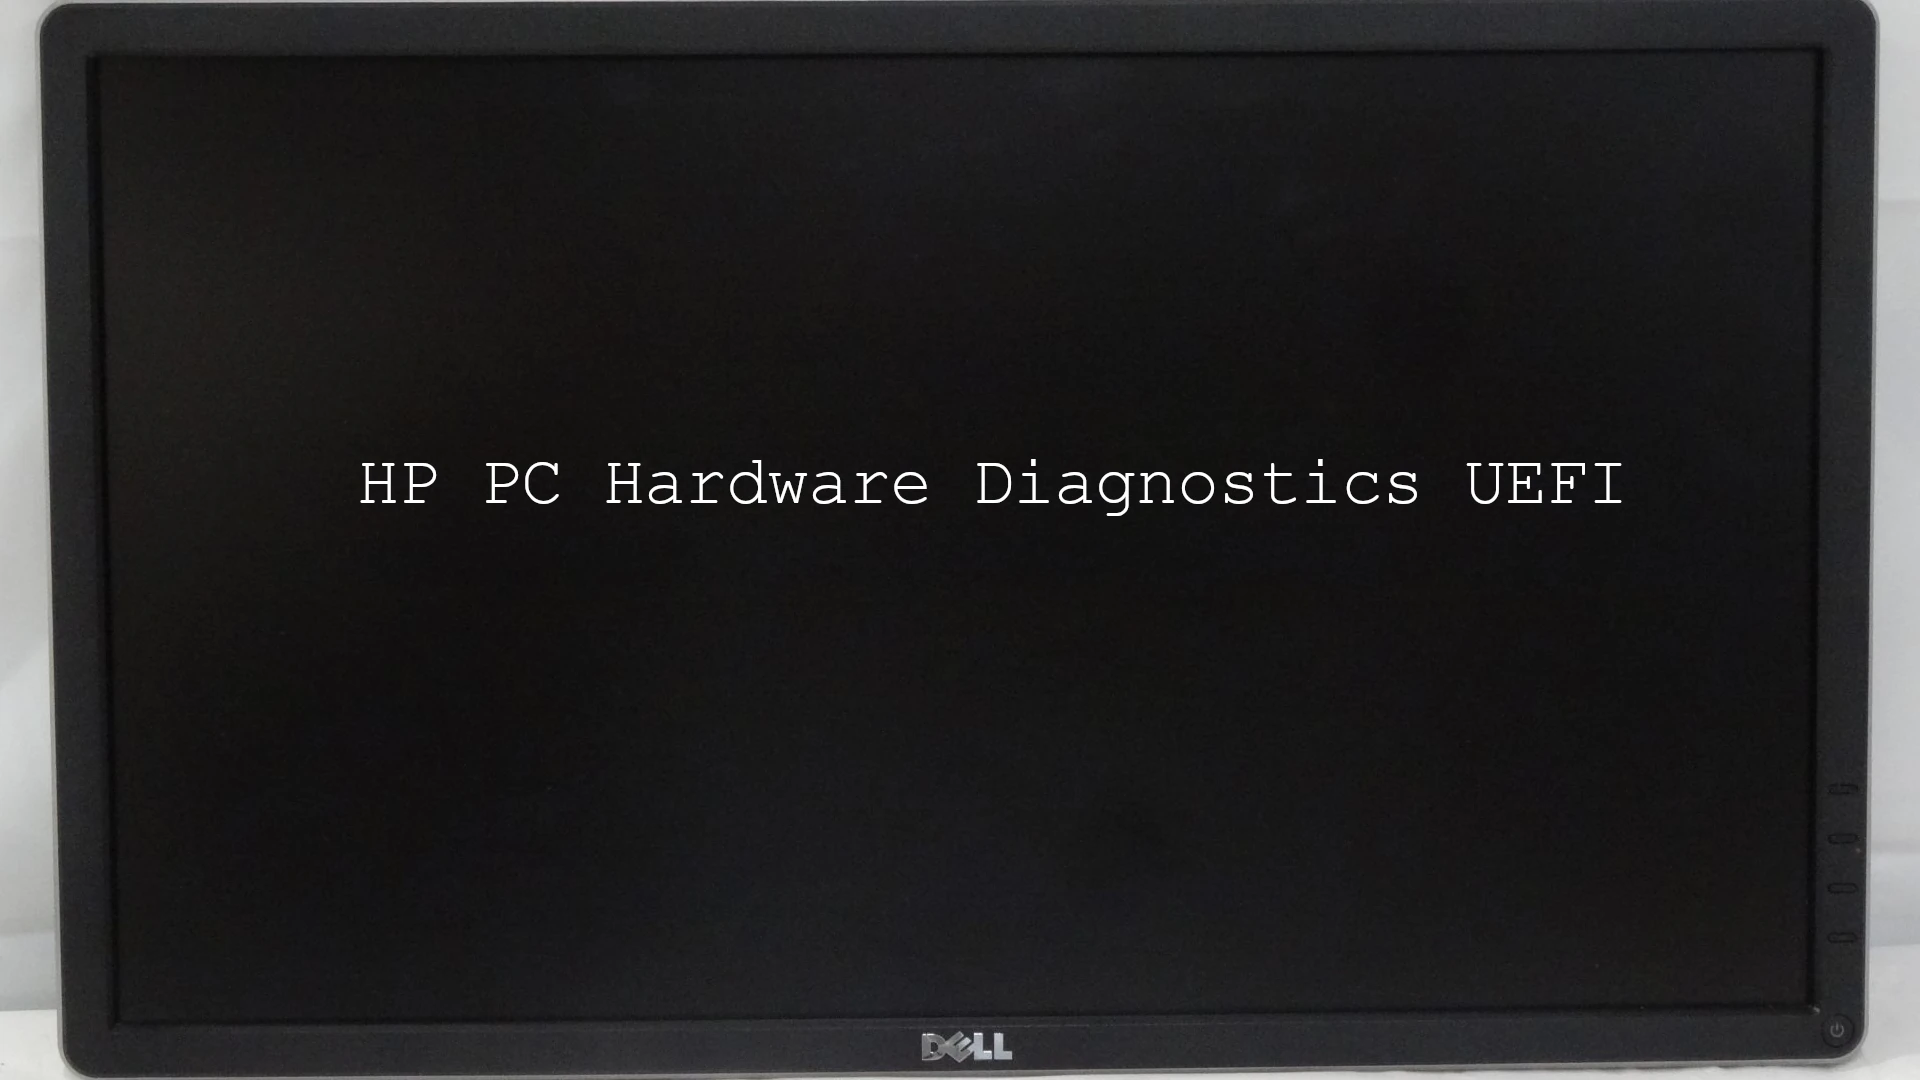 HP PC Hardware Diagnostics UEFI